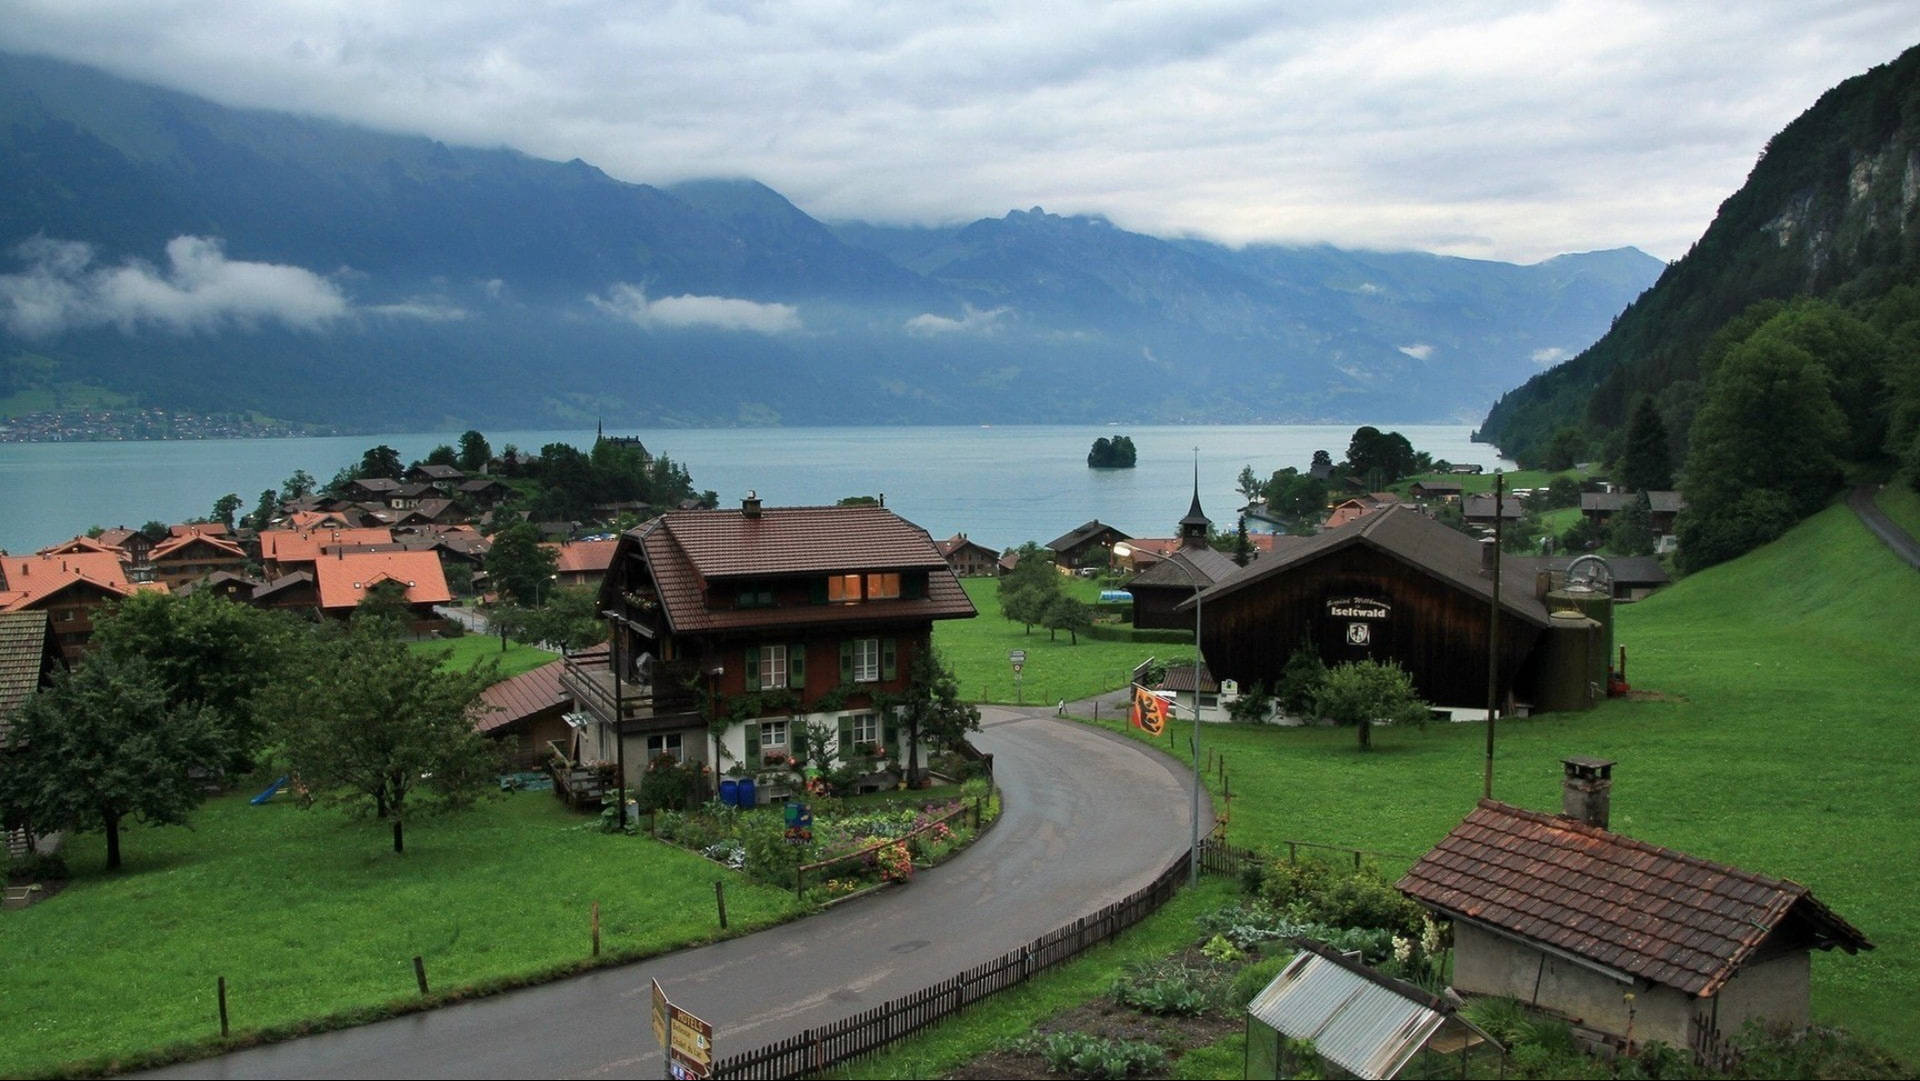 Scenic view of Iseltwald village, Switzerland Wallpaper